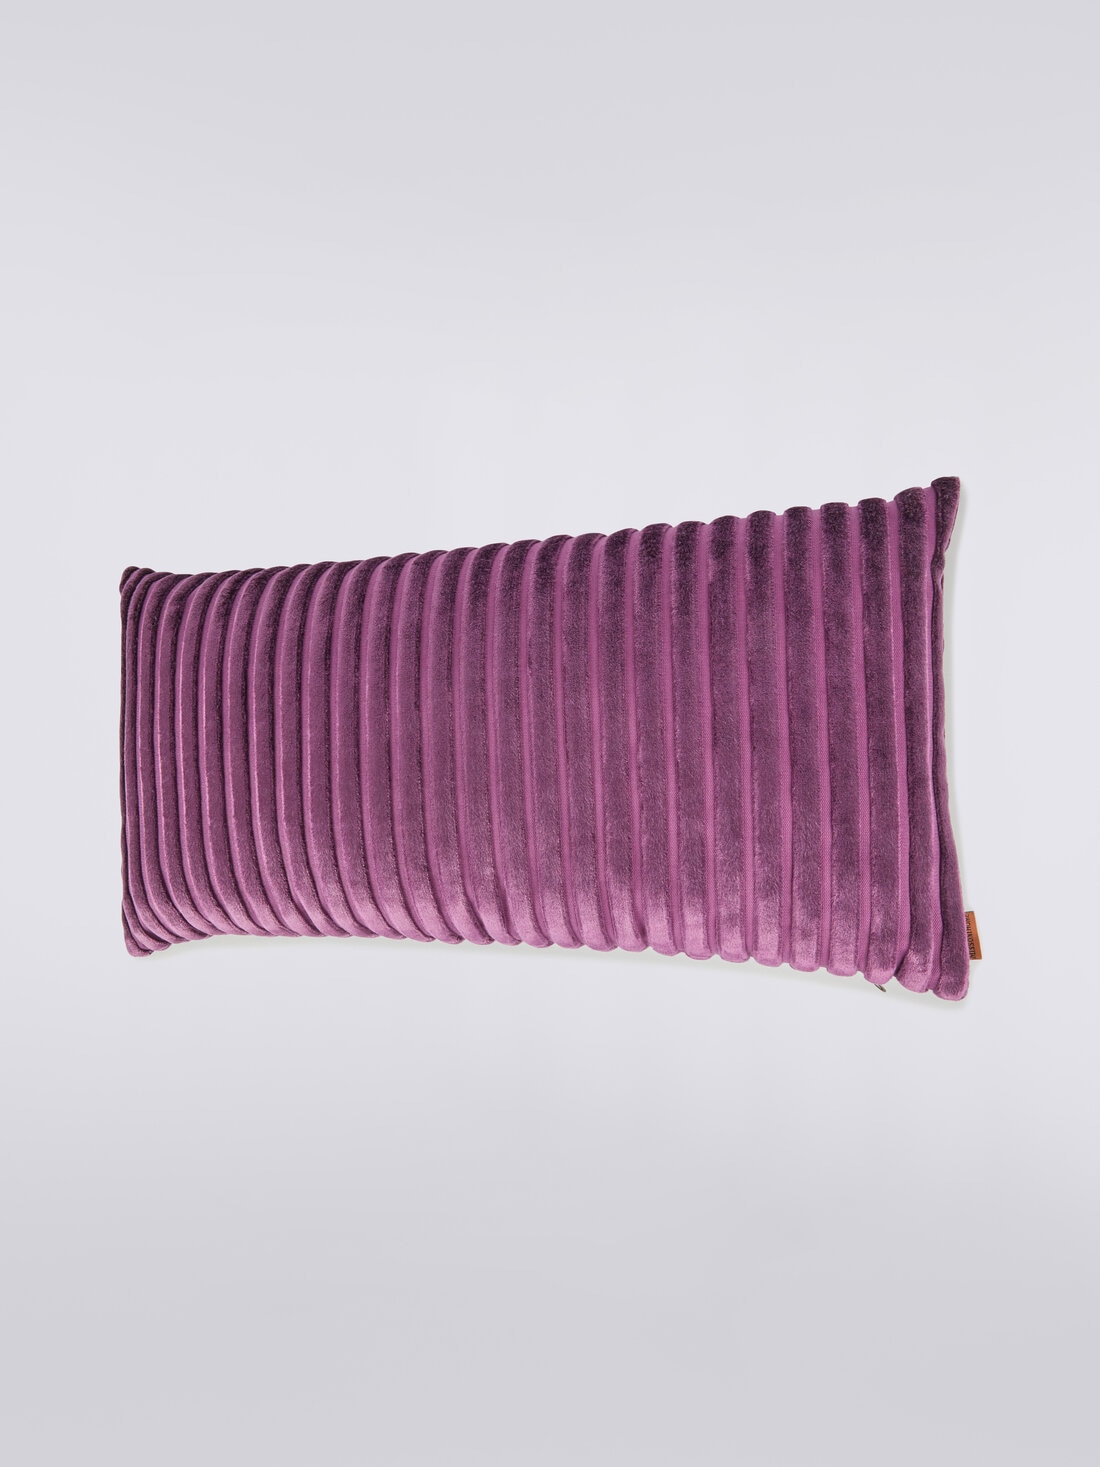 Coomba Cushion 30X60, Purple  - 8033050074525 - 1